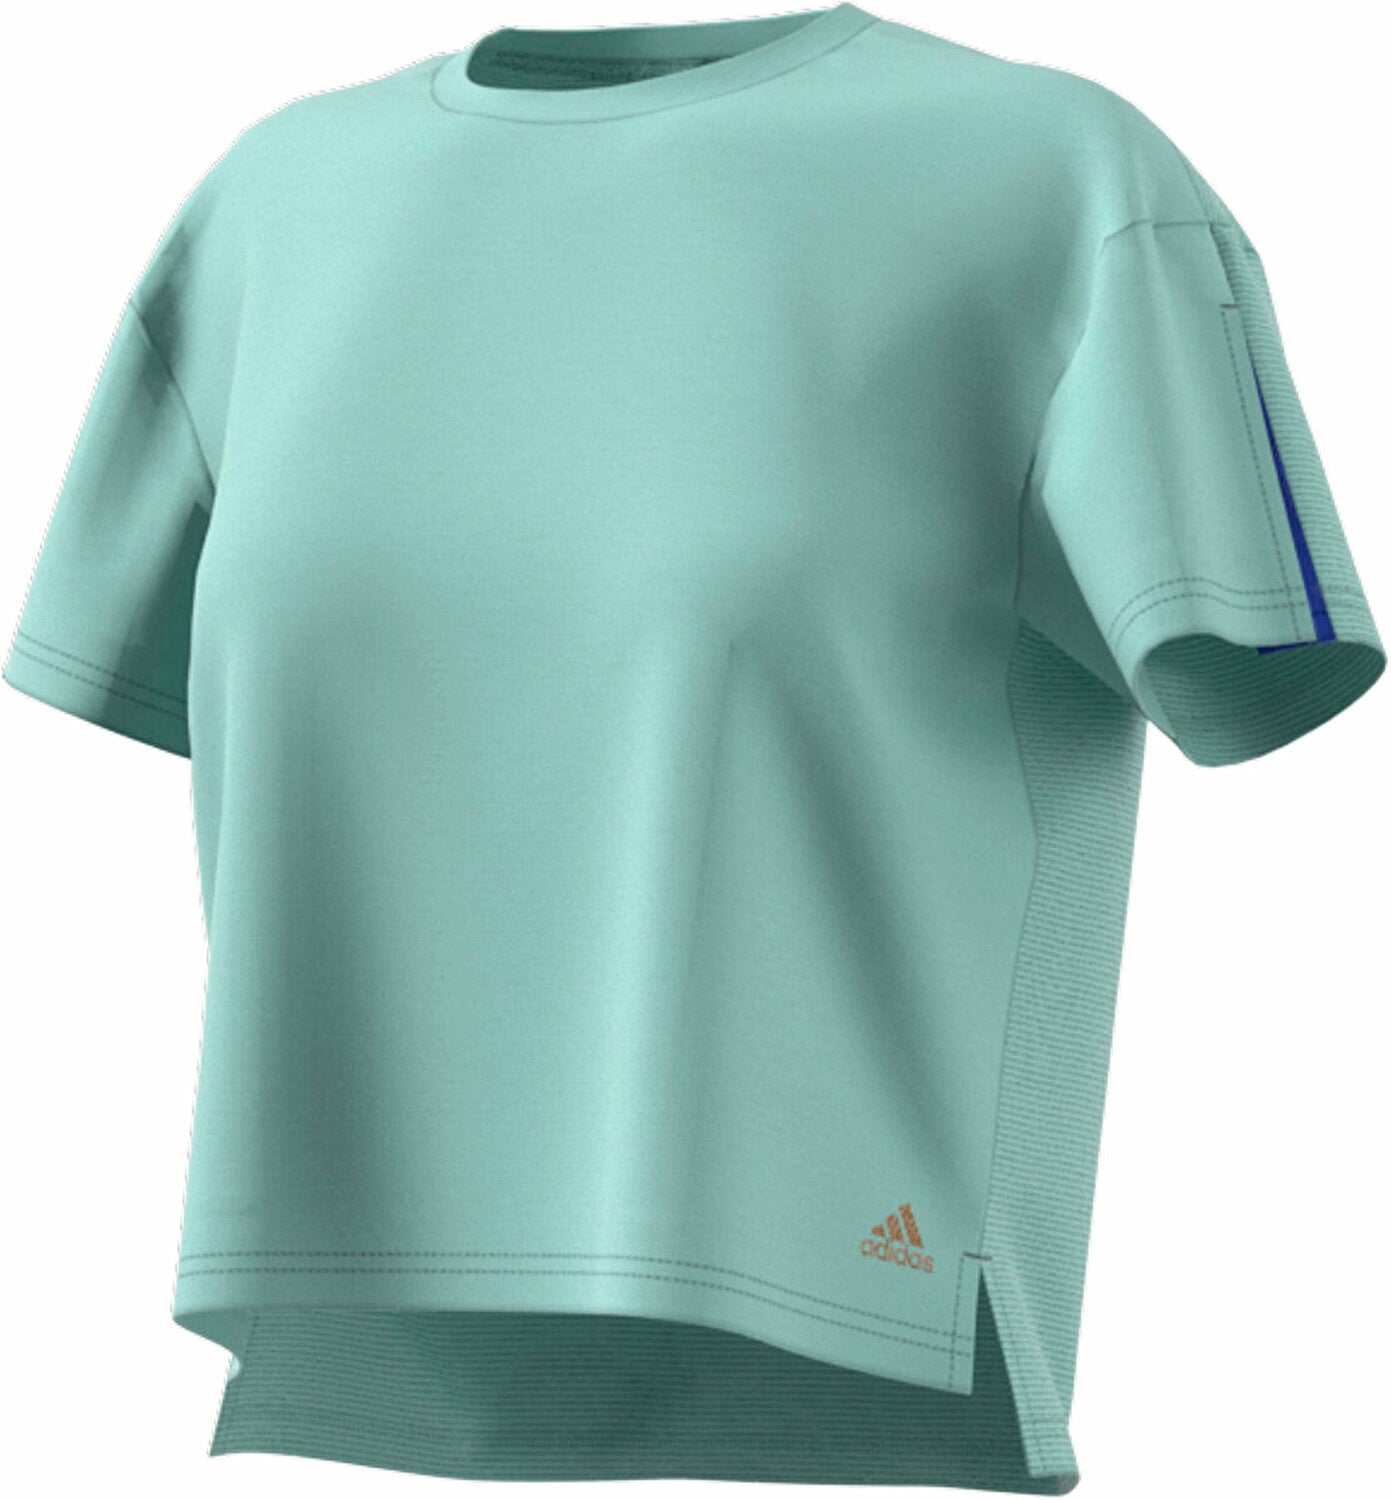 Adidas women’s sportswear T-shirt